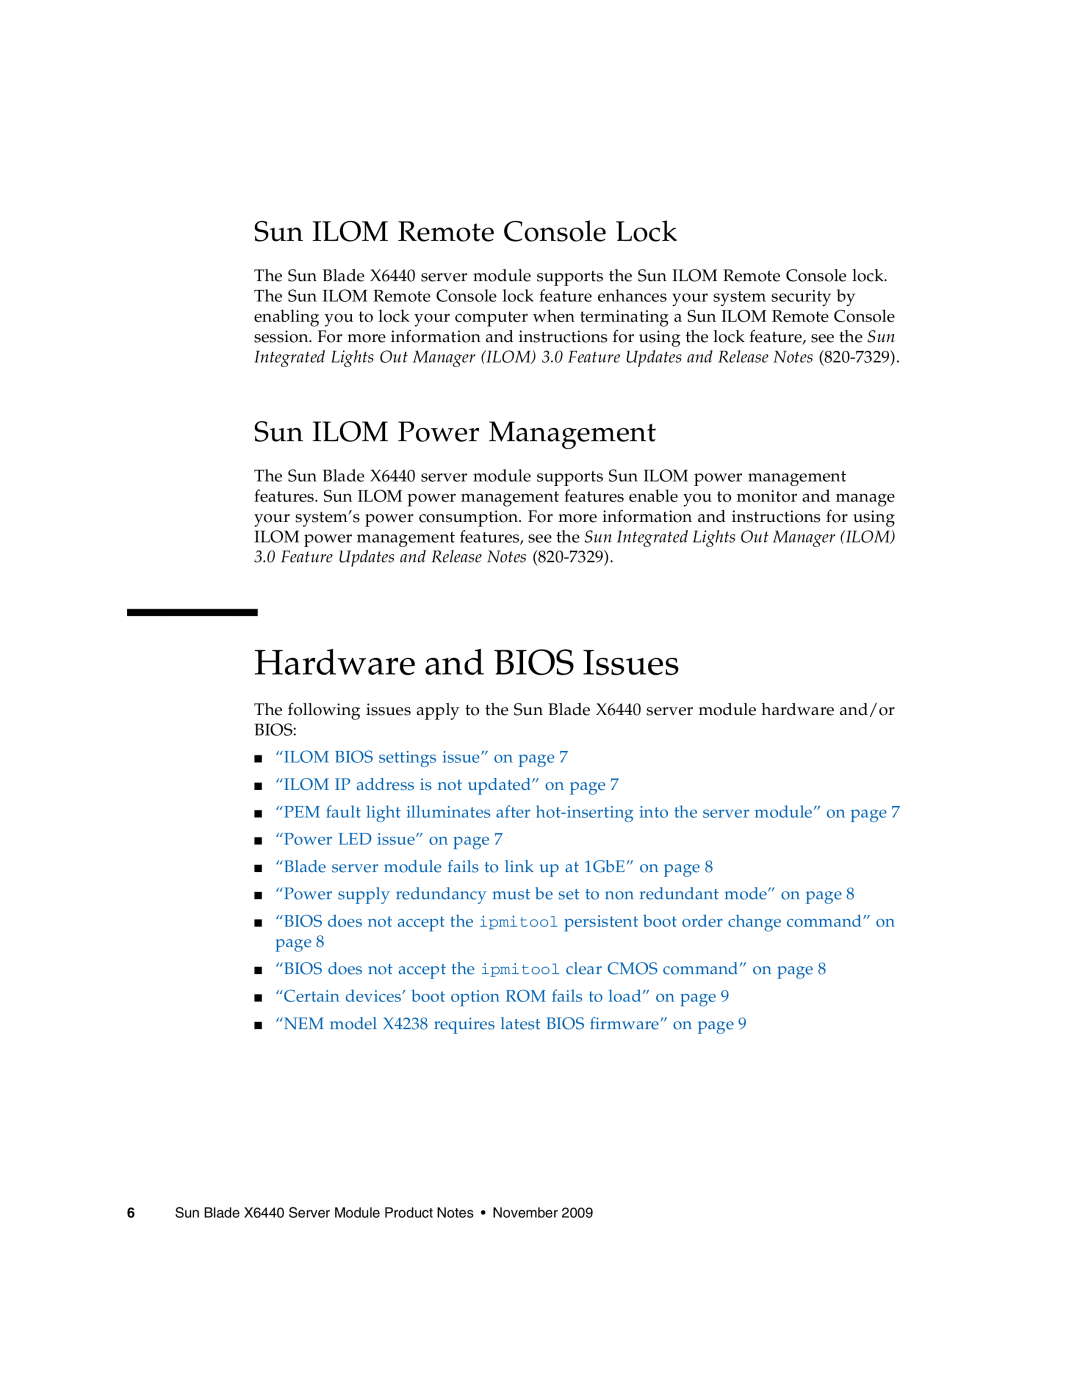 Sun Microsystems X6440 manual Hardware and BIOS Issues, Sun ILOM Remote Console Lock, Sun ILOM Power Management 